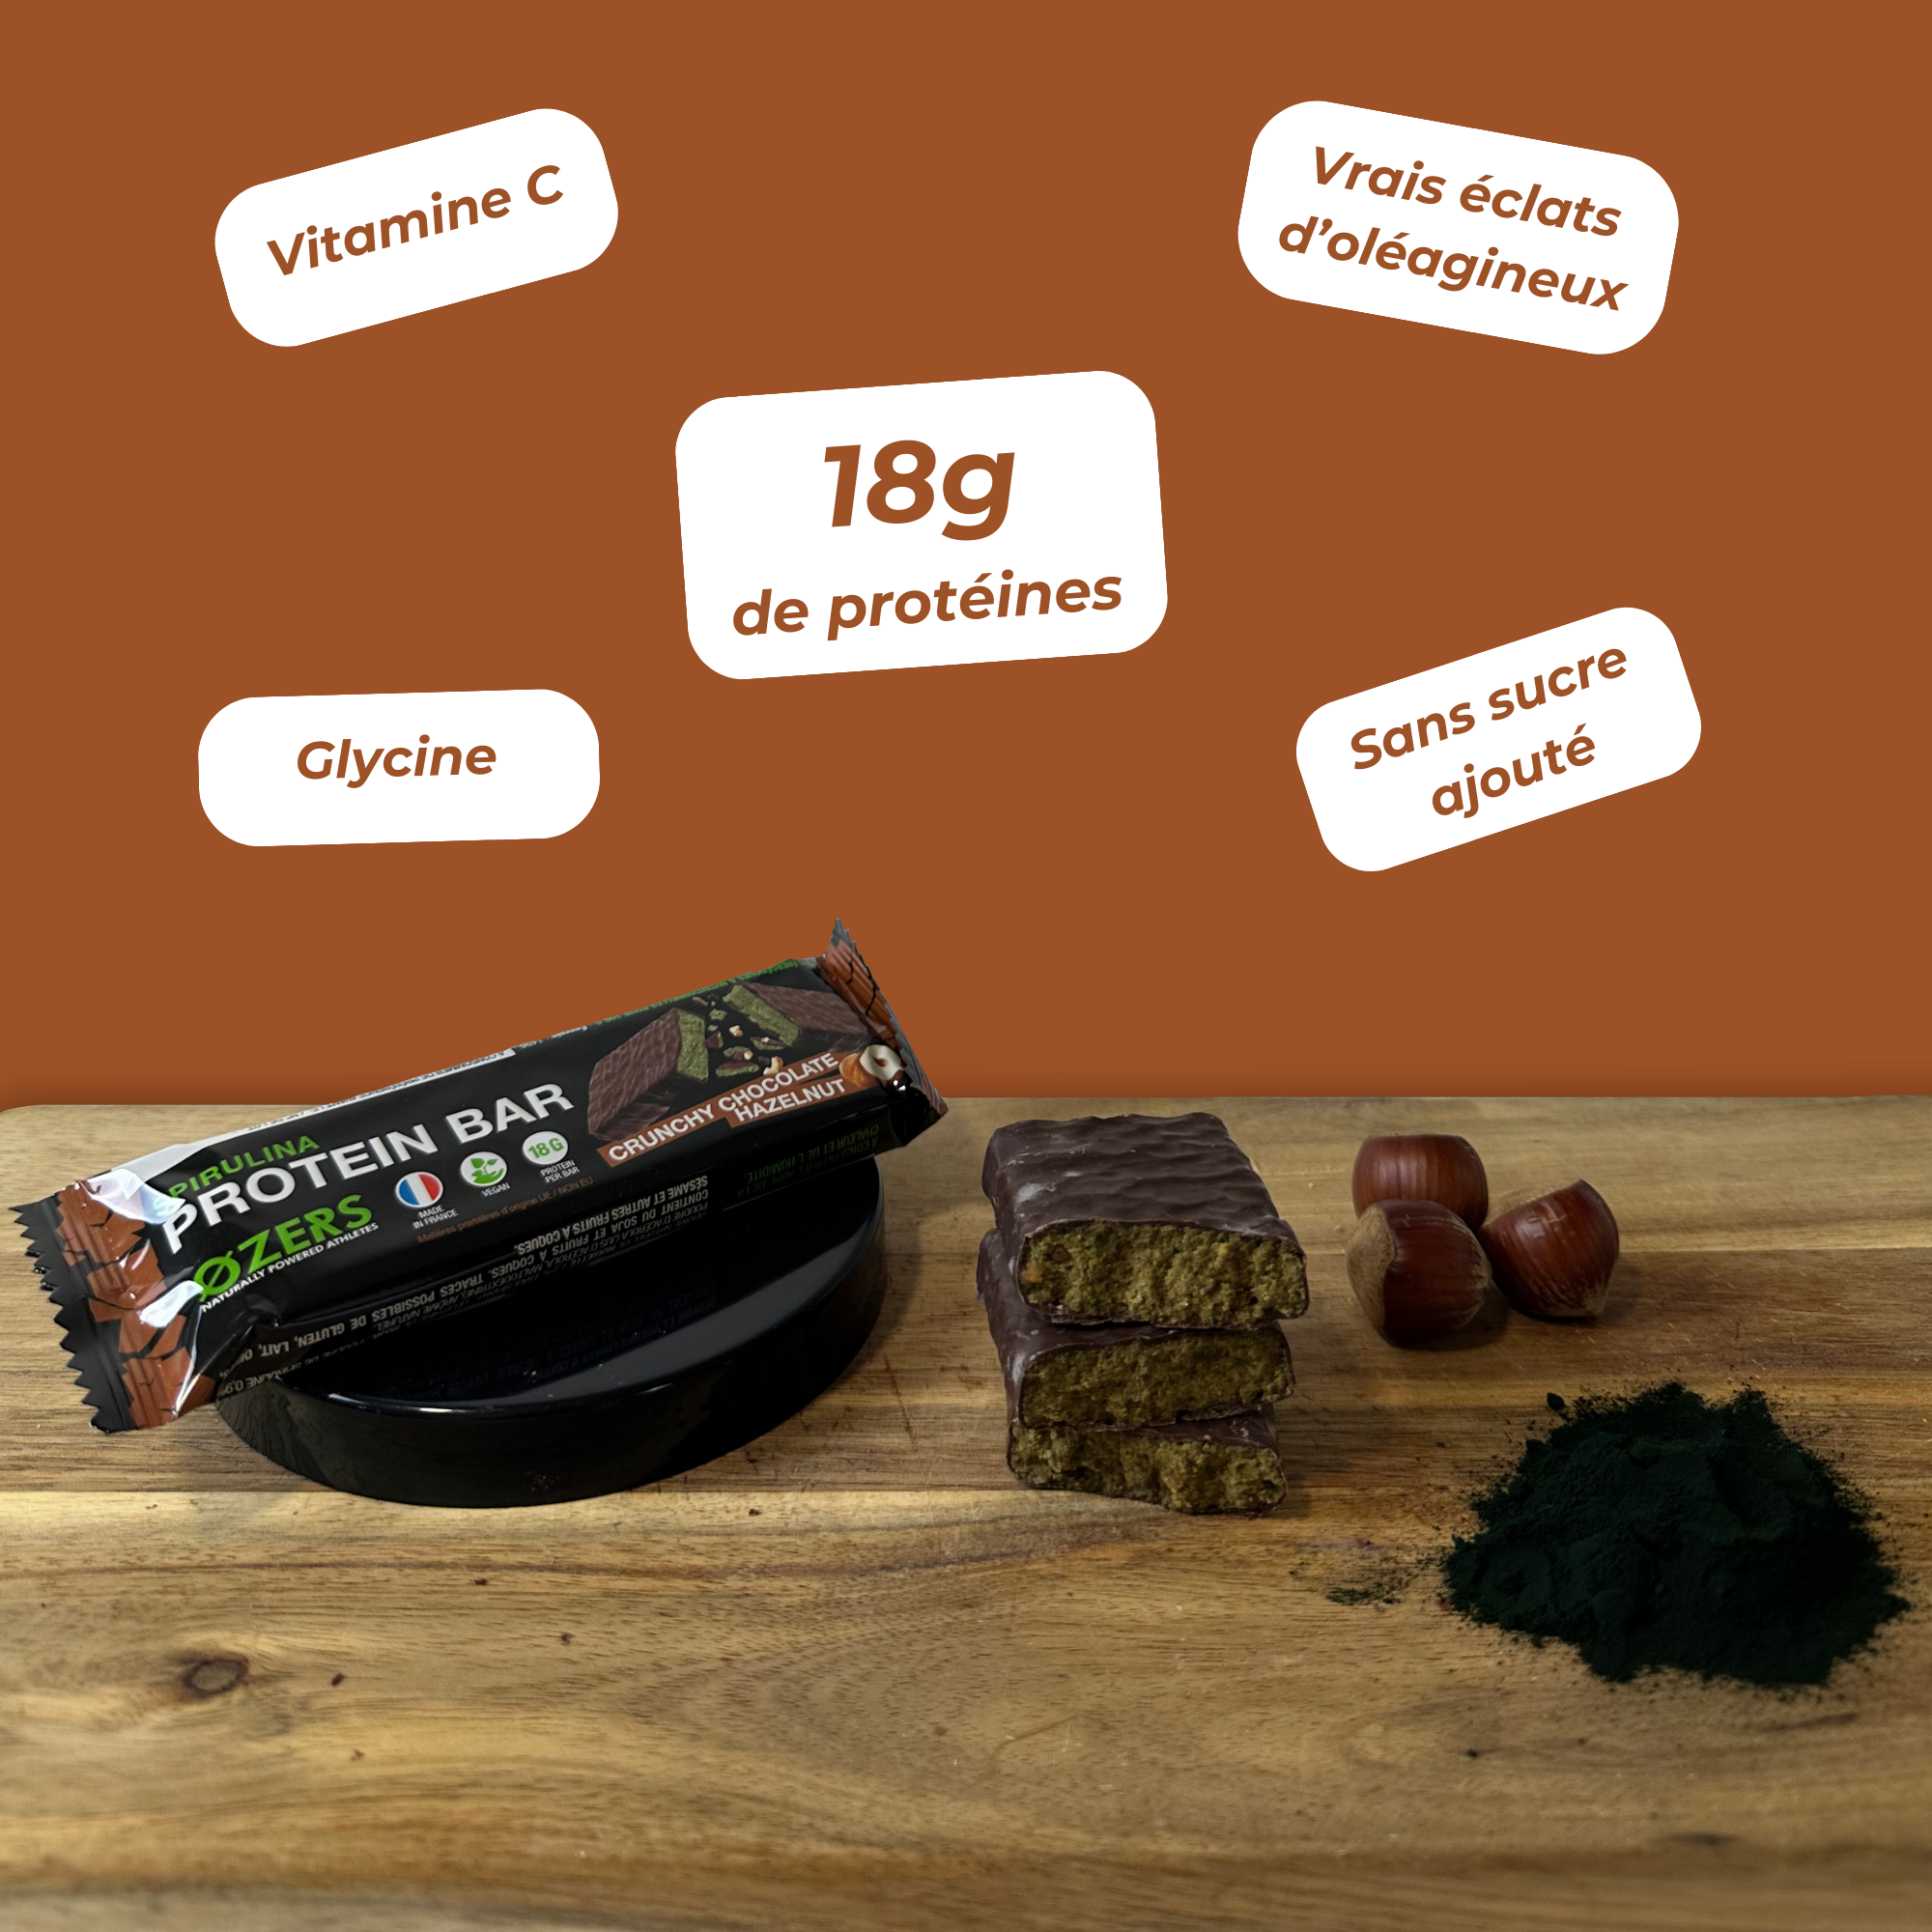 ØZERS - Protéine Végétale Vanille - Délicieuses, Vegan & Made in France